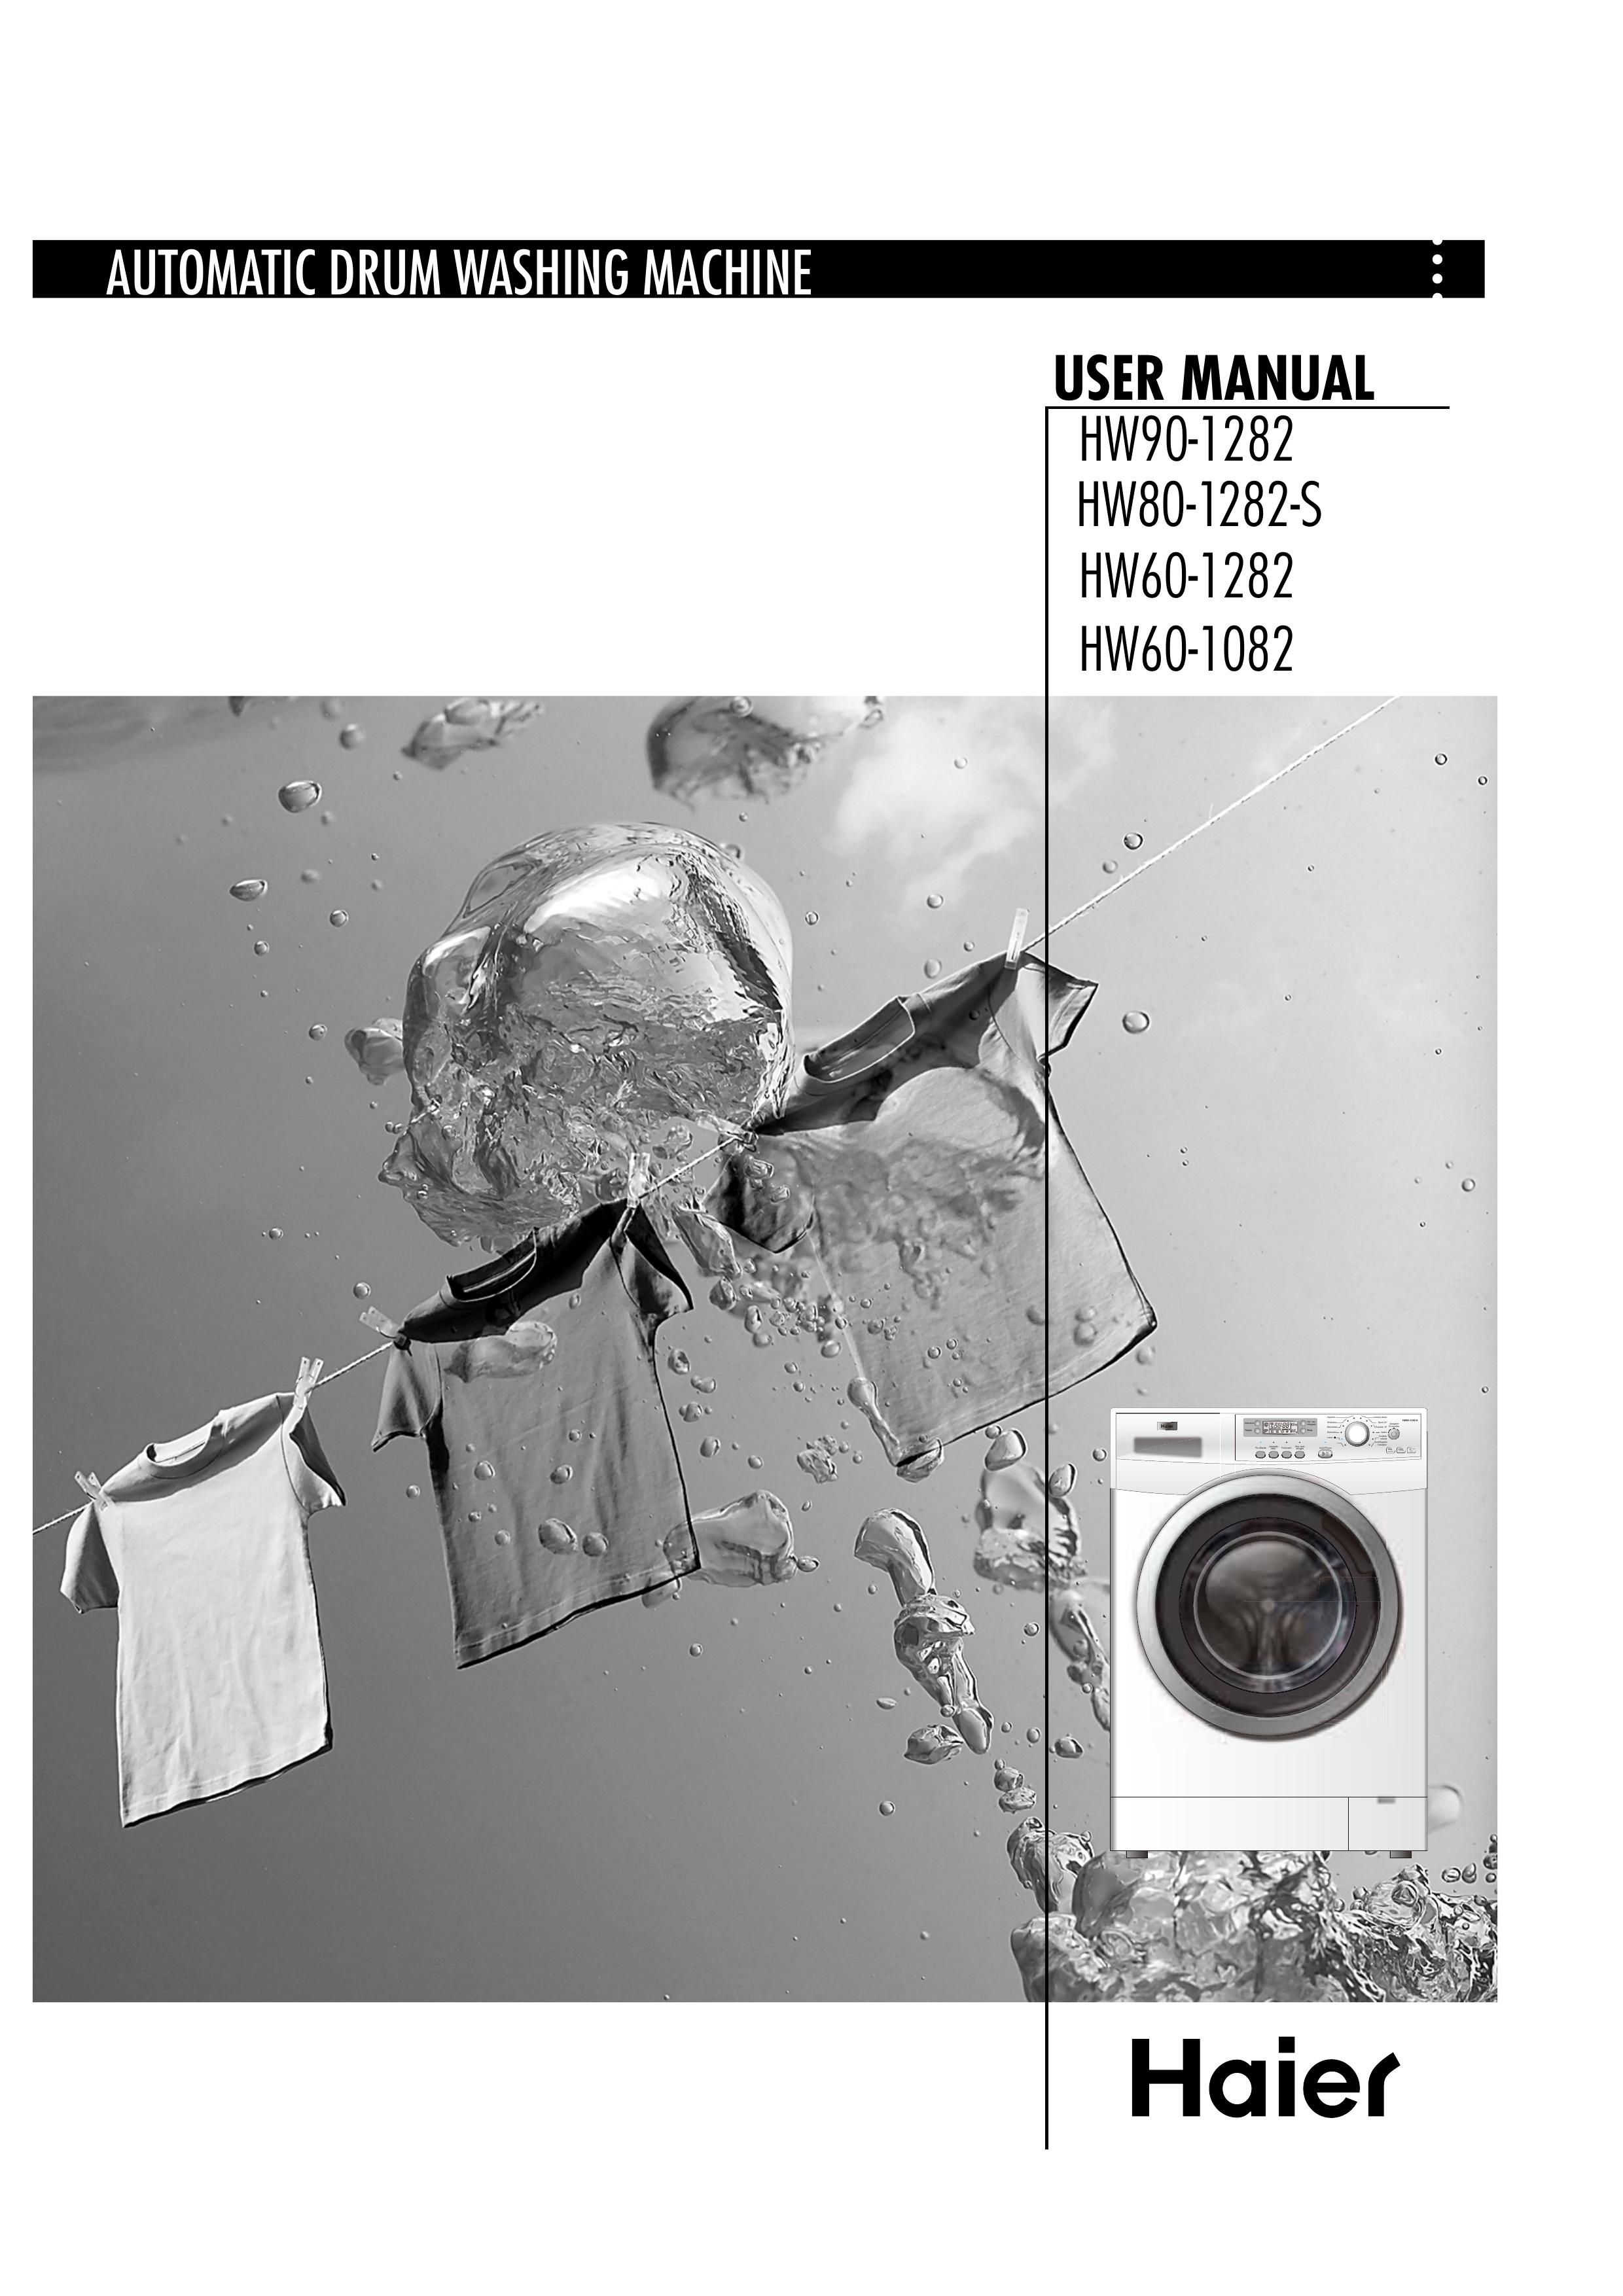 Haier HW60-1282 Washer/Dryer User Manual